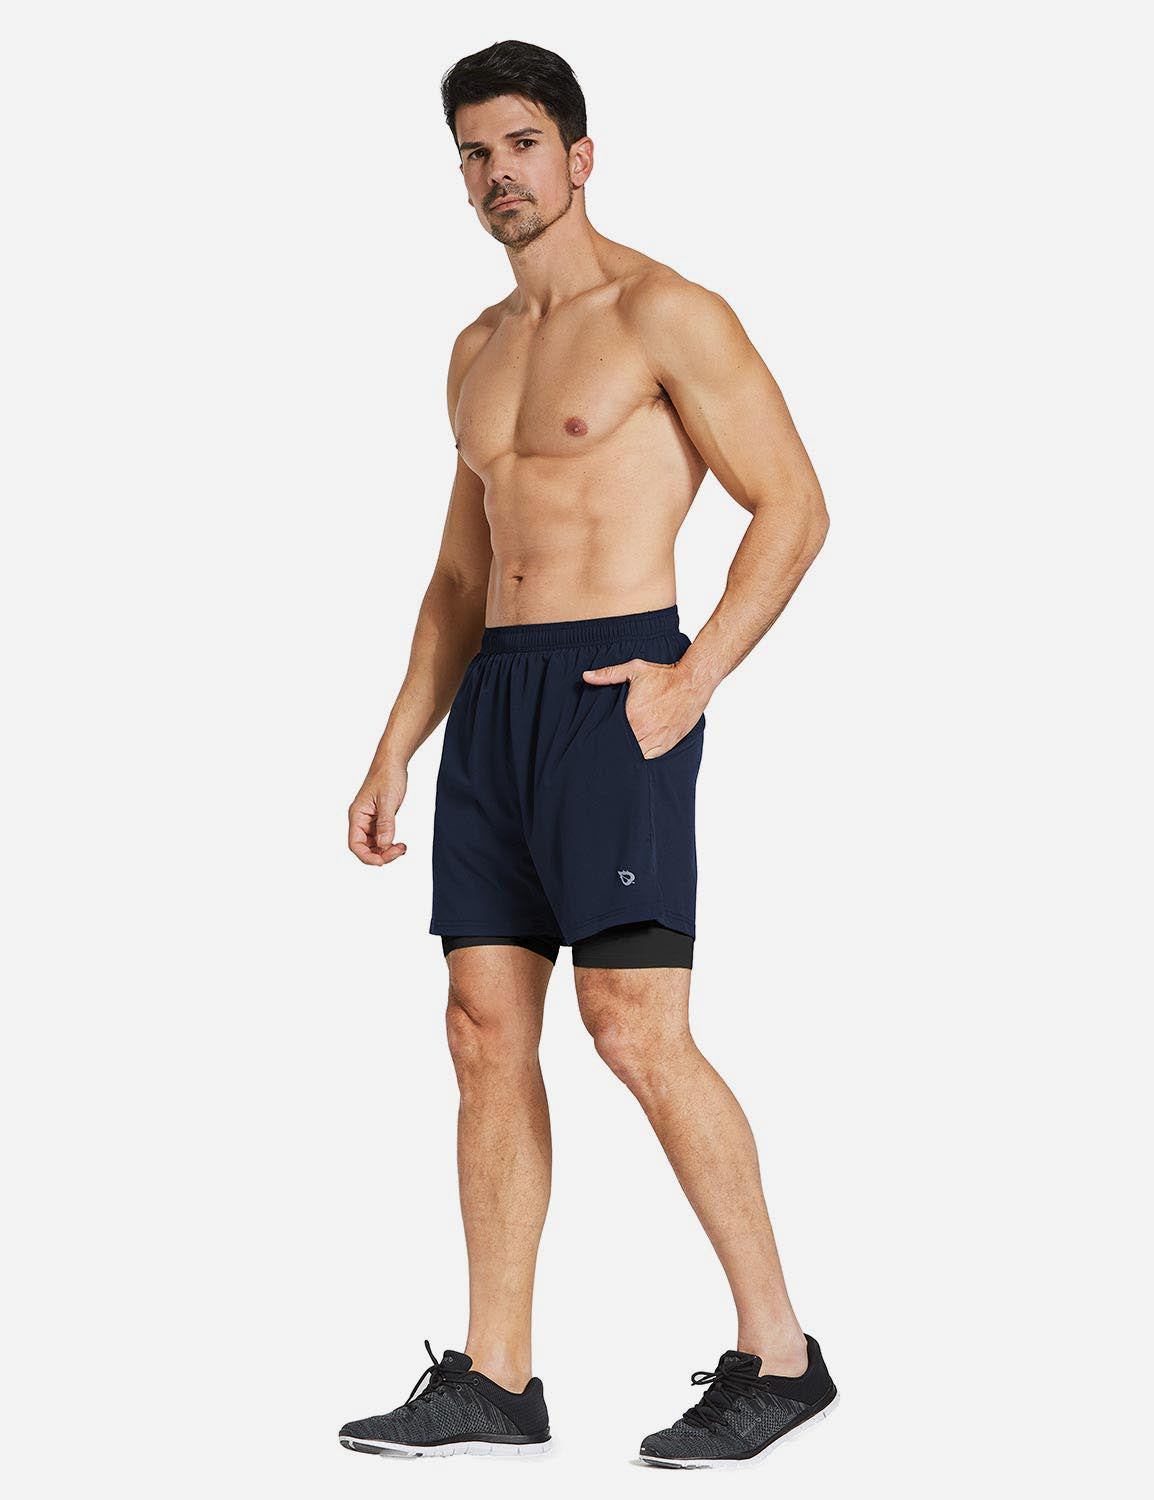 CA, Gym Shorts for Men, Men's Training Shorts